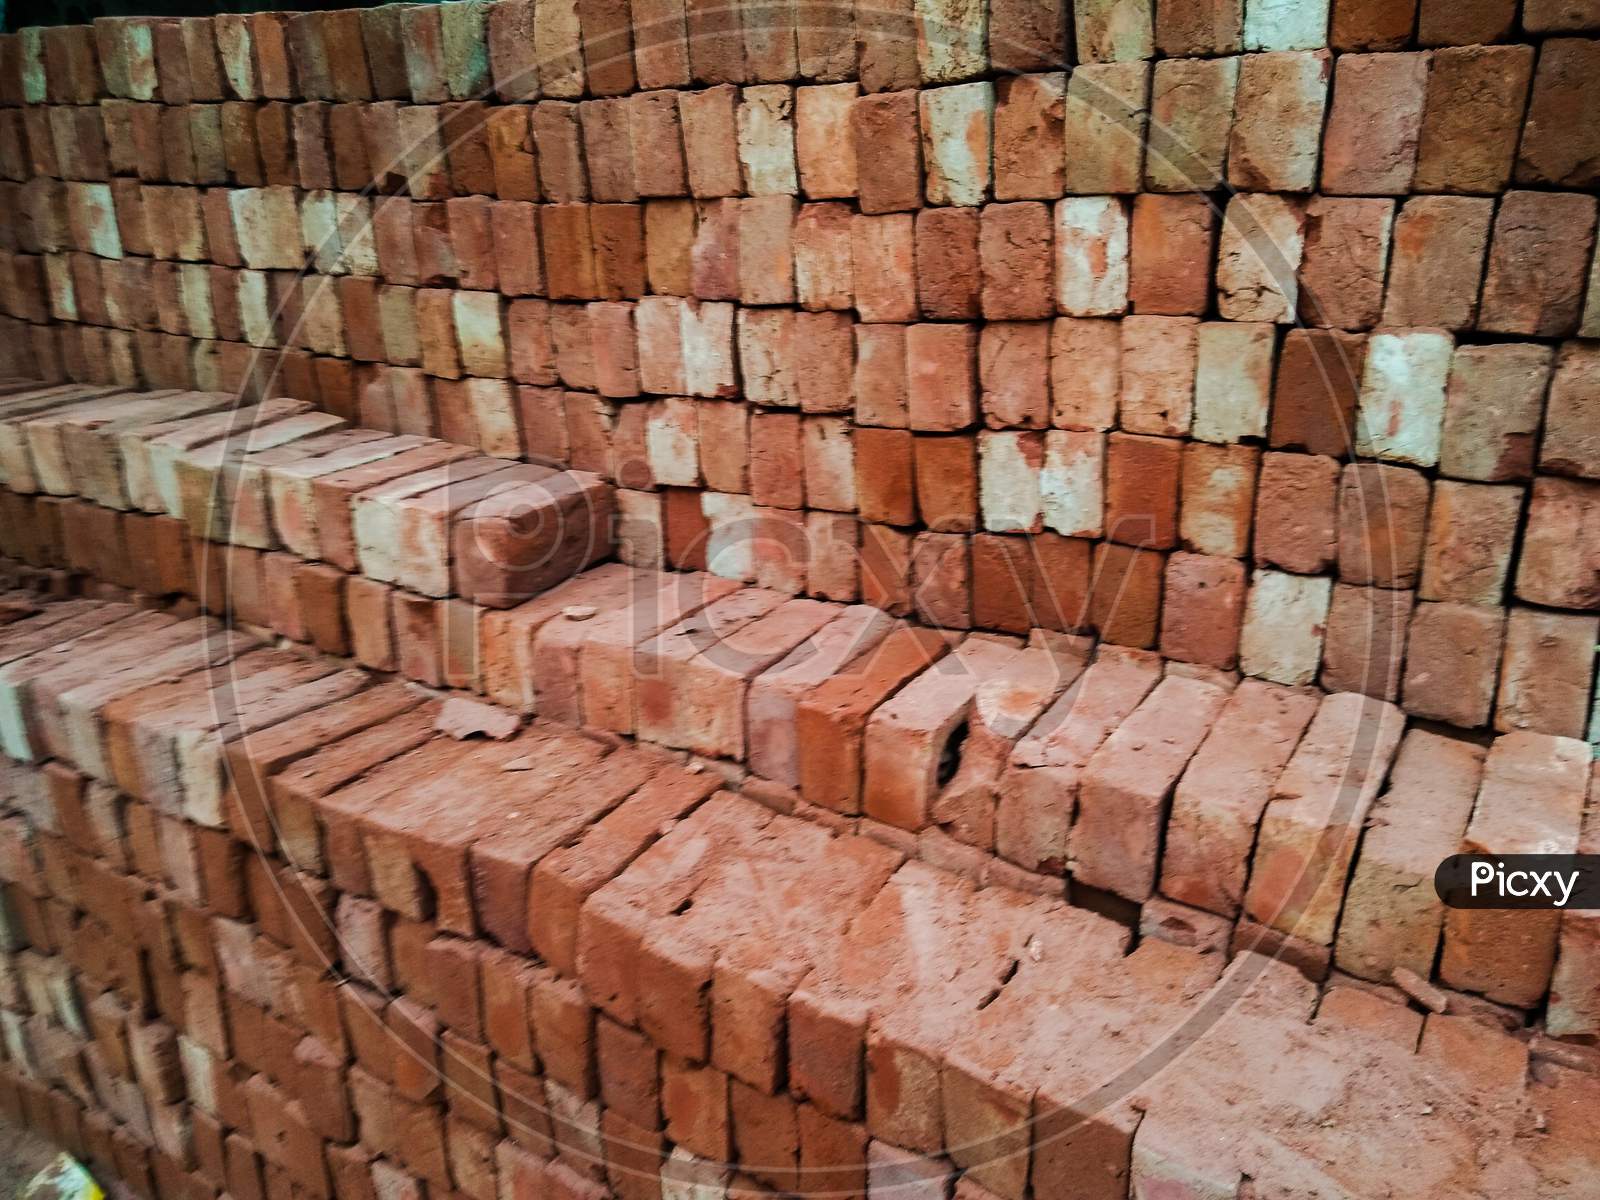 Red Bricks or bricks At a Construction Site